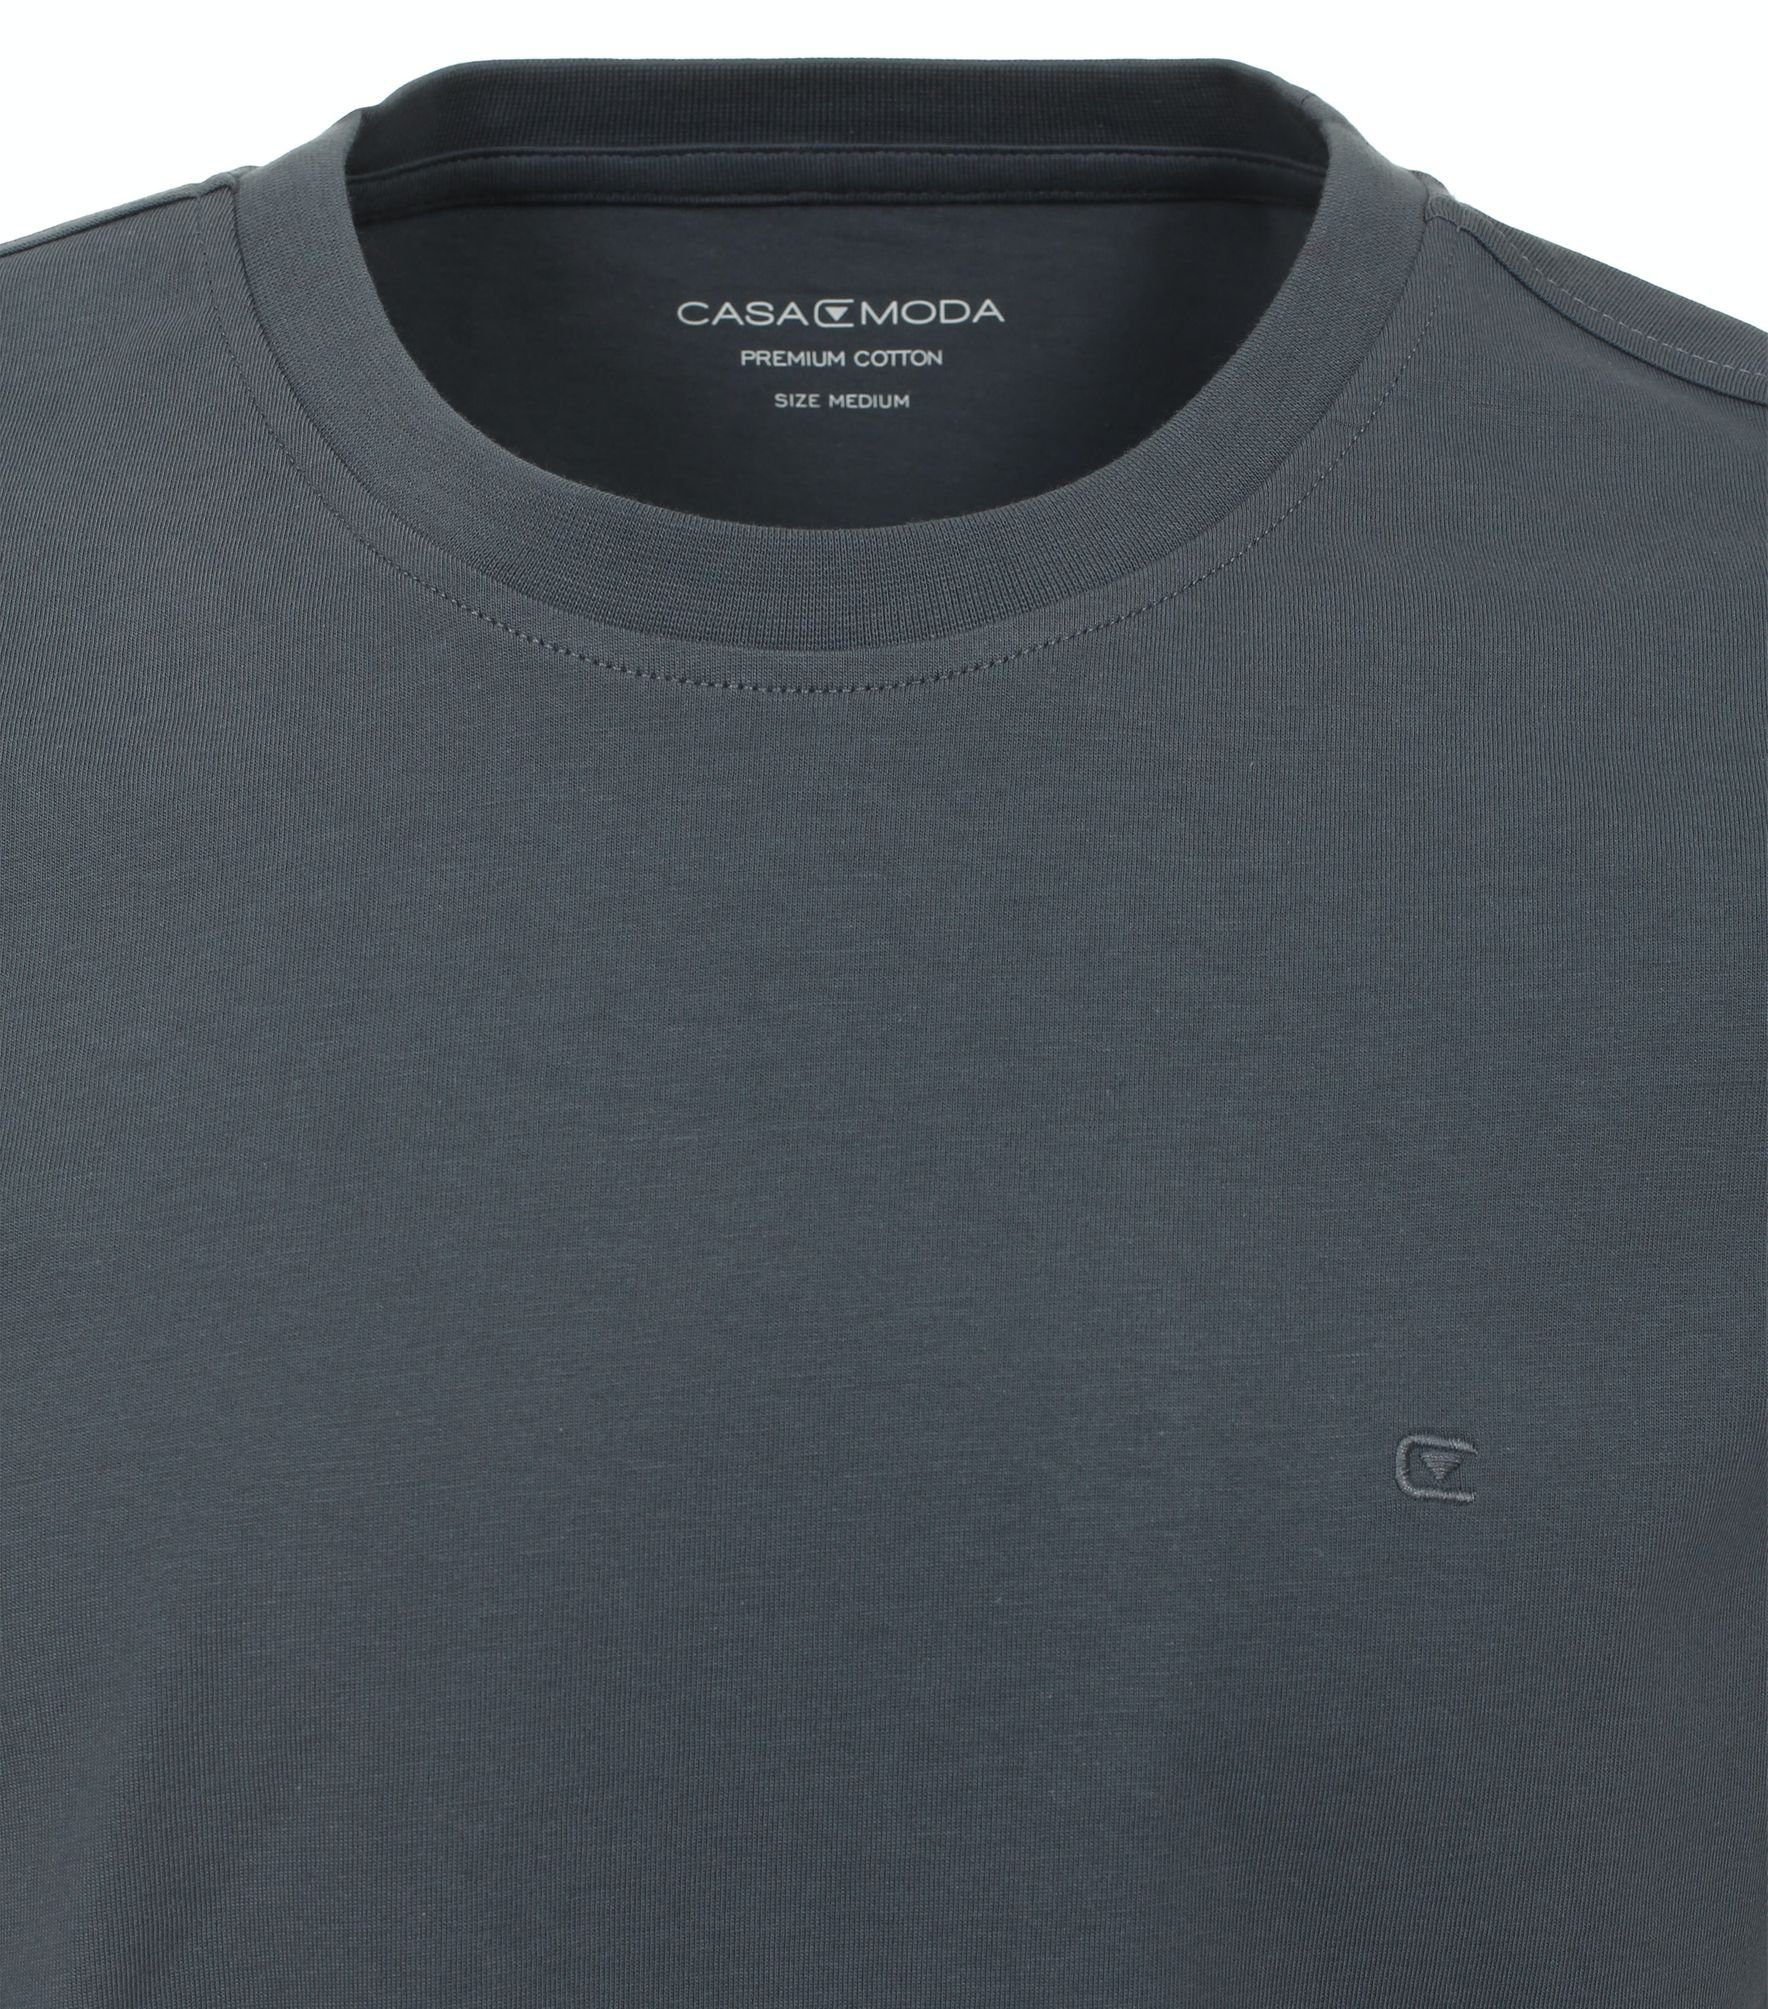 CASAMODA 004200 Anthrazit T-Shirt unifarben T-Shirt (766)